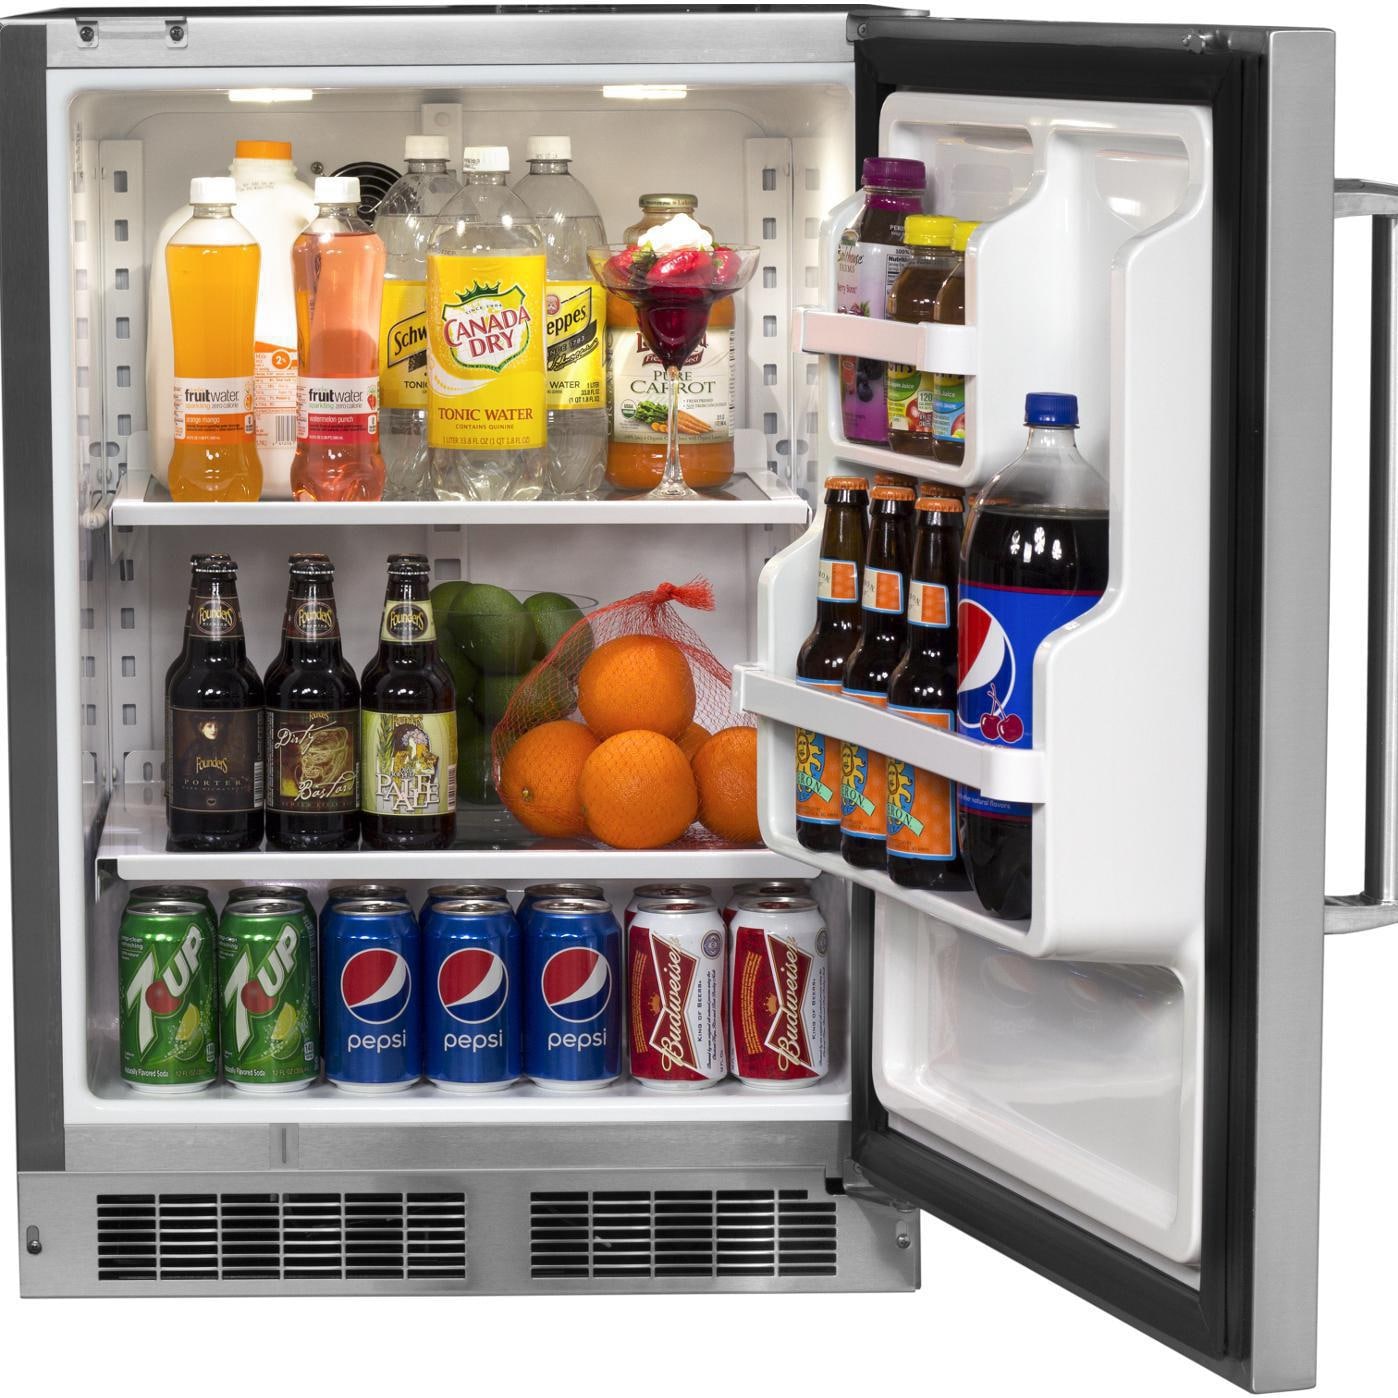 Fire Magic 3598-DL 20 4.0 Cu. Ft. Premium Left Hinge Compact Refrigerator  - Stainless Steel Door/Black Cabinet